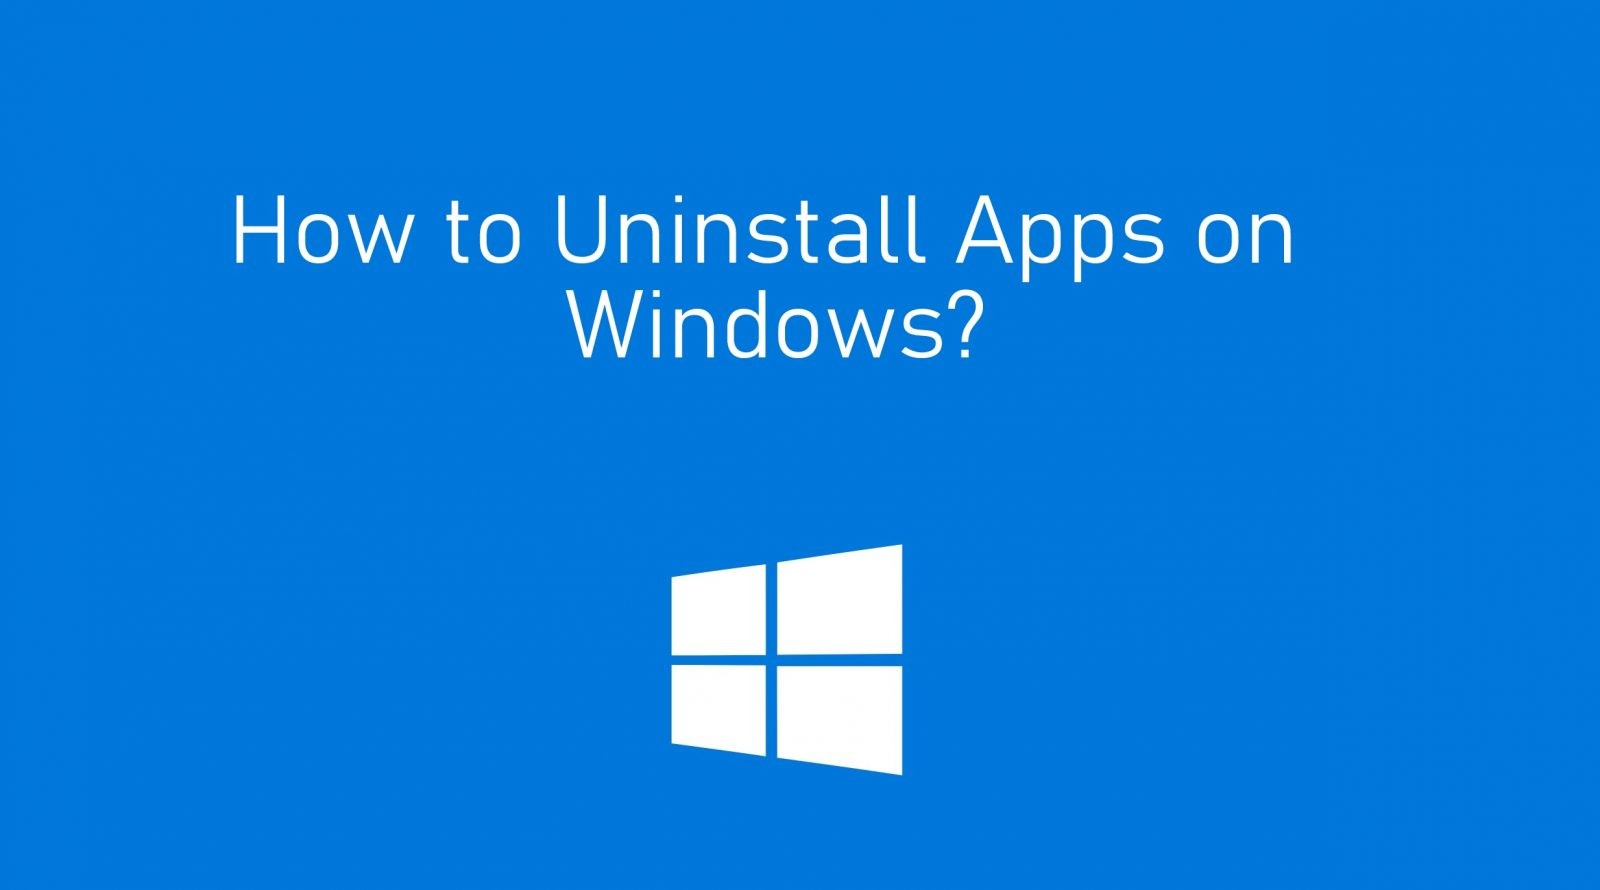 uninstall applications windows 10